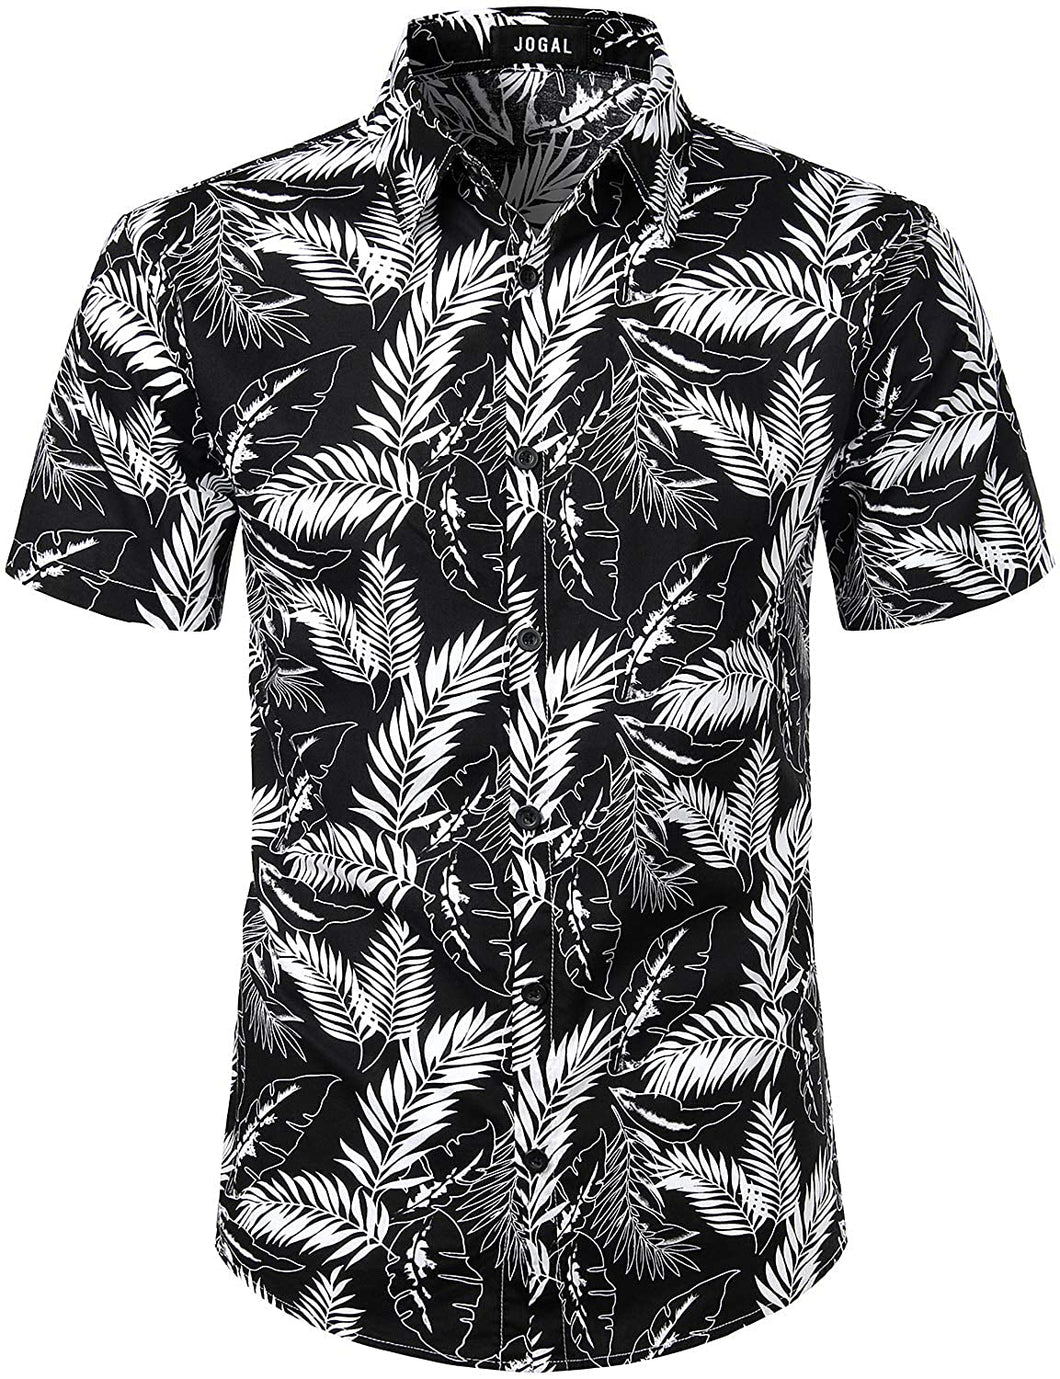 Men's Black Leaf Print Button Down Short Sleeve Shirt